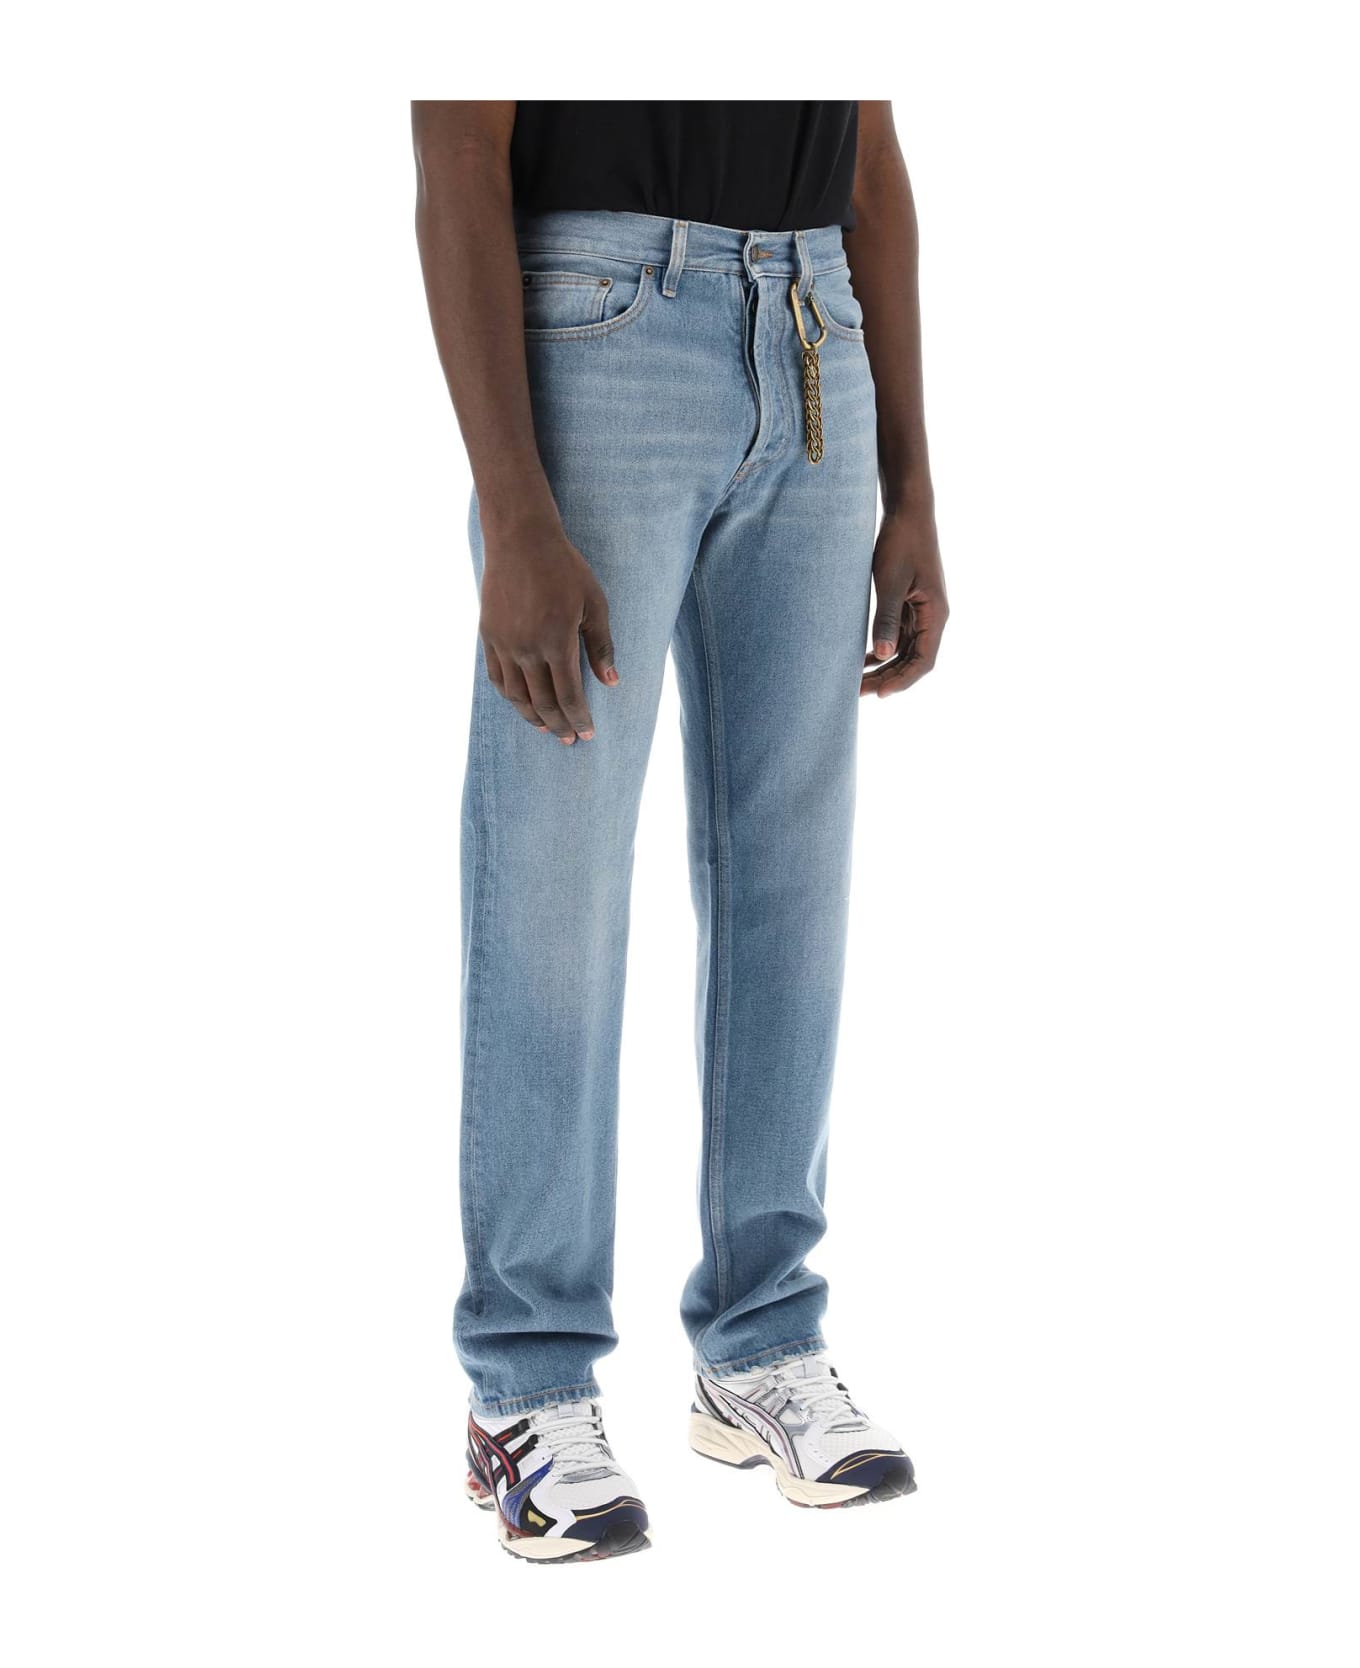 DARKPARK Larry Straight Cut Jeans - Full Blue